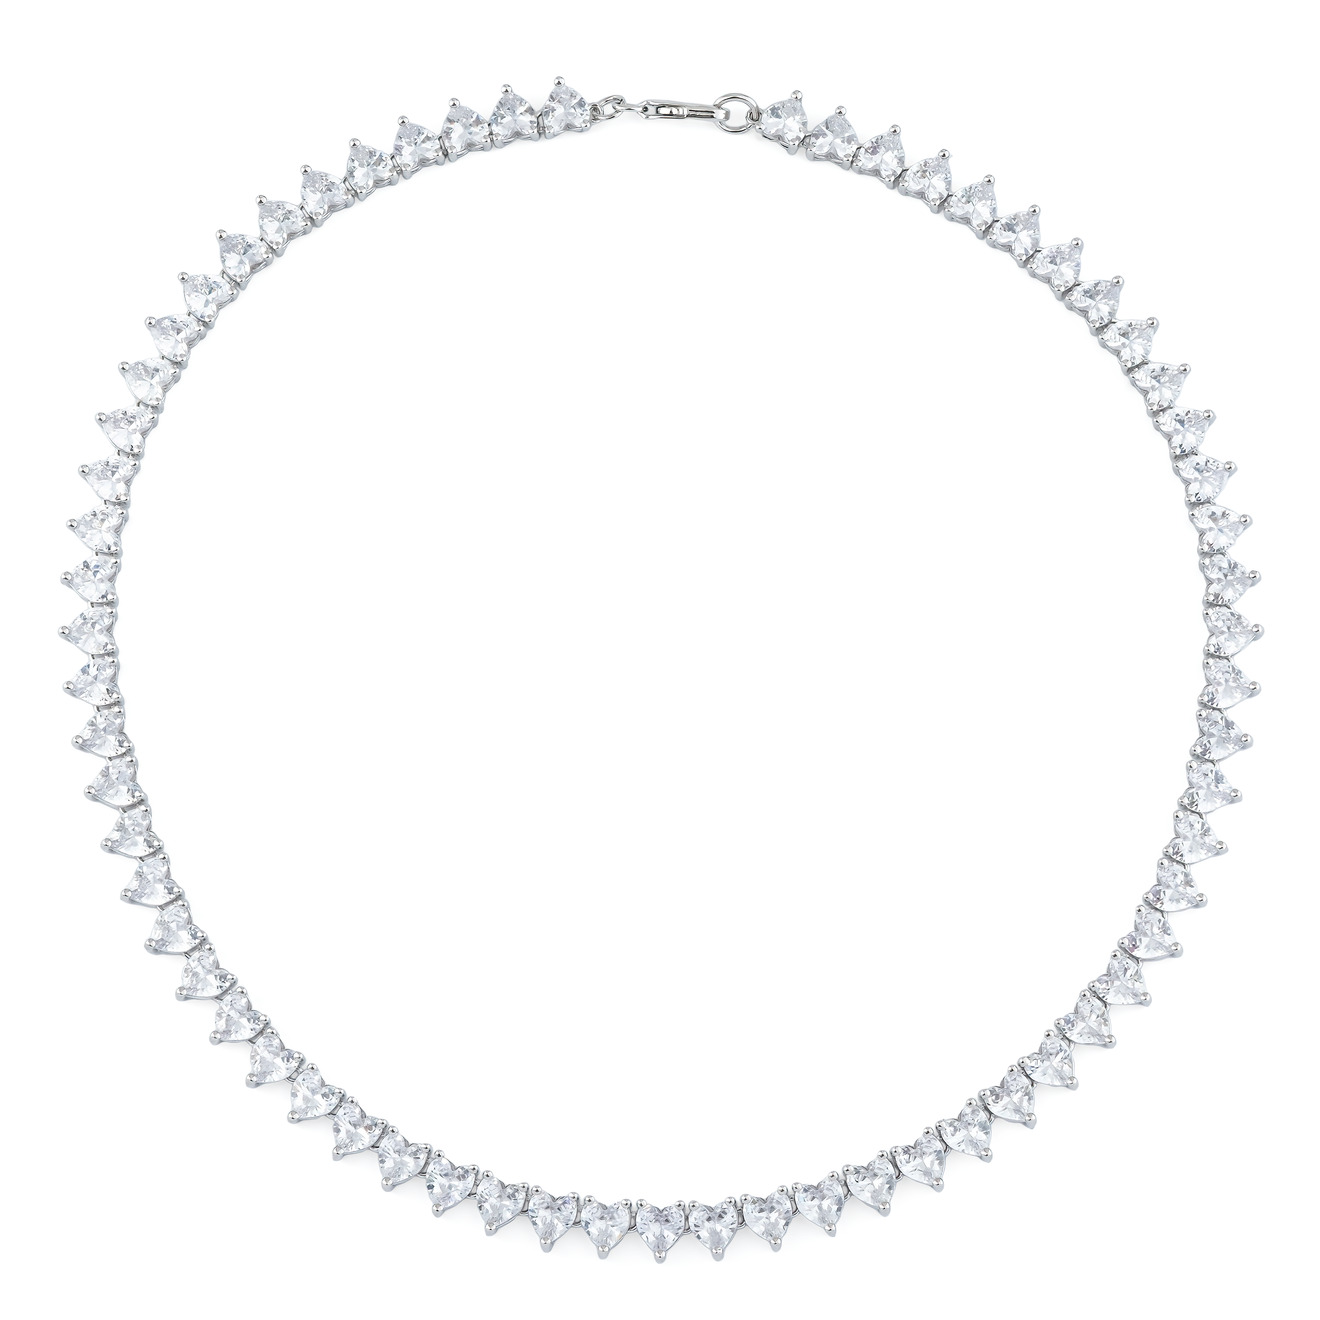 Herald Percy Серебристое колье с кристаллами herald percy серебристое кольцо из сердец с белыми и розовыми кристаллами